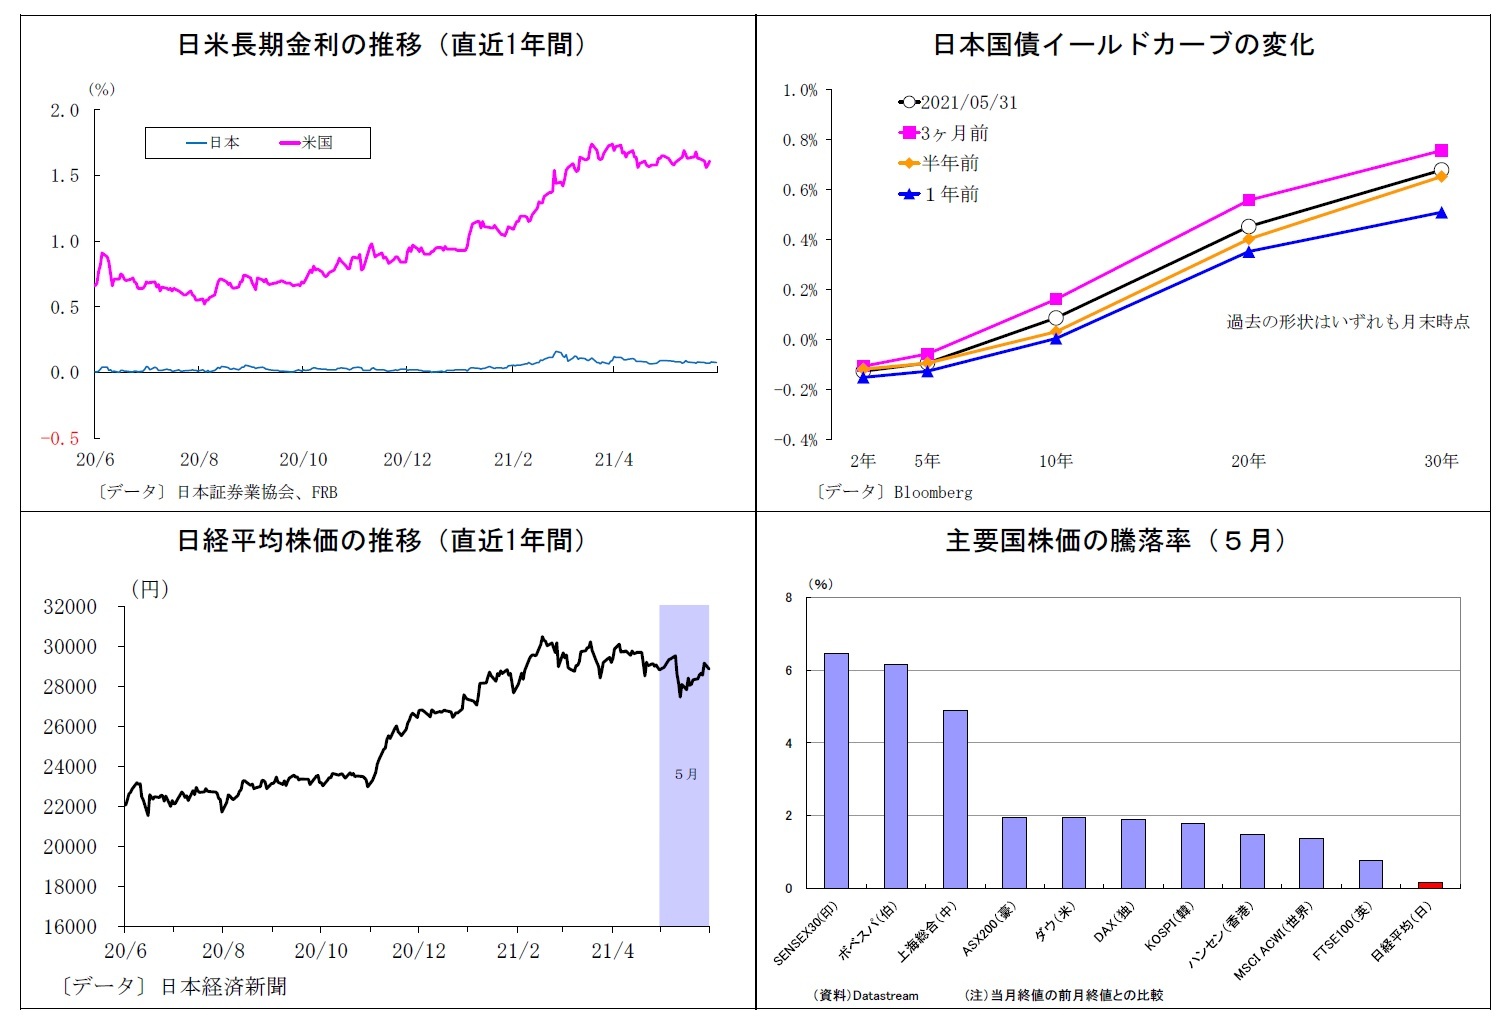 日米長期金利の推移（直近1年間）/日本国債イールドカーブの変化/日経平均株価の推移（直近1年間）/主要国株価の騰落率（５月）